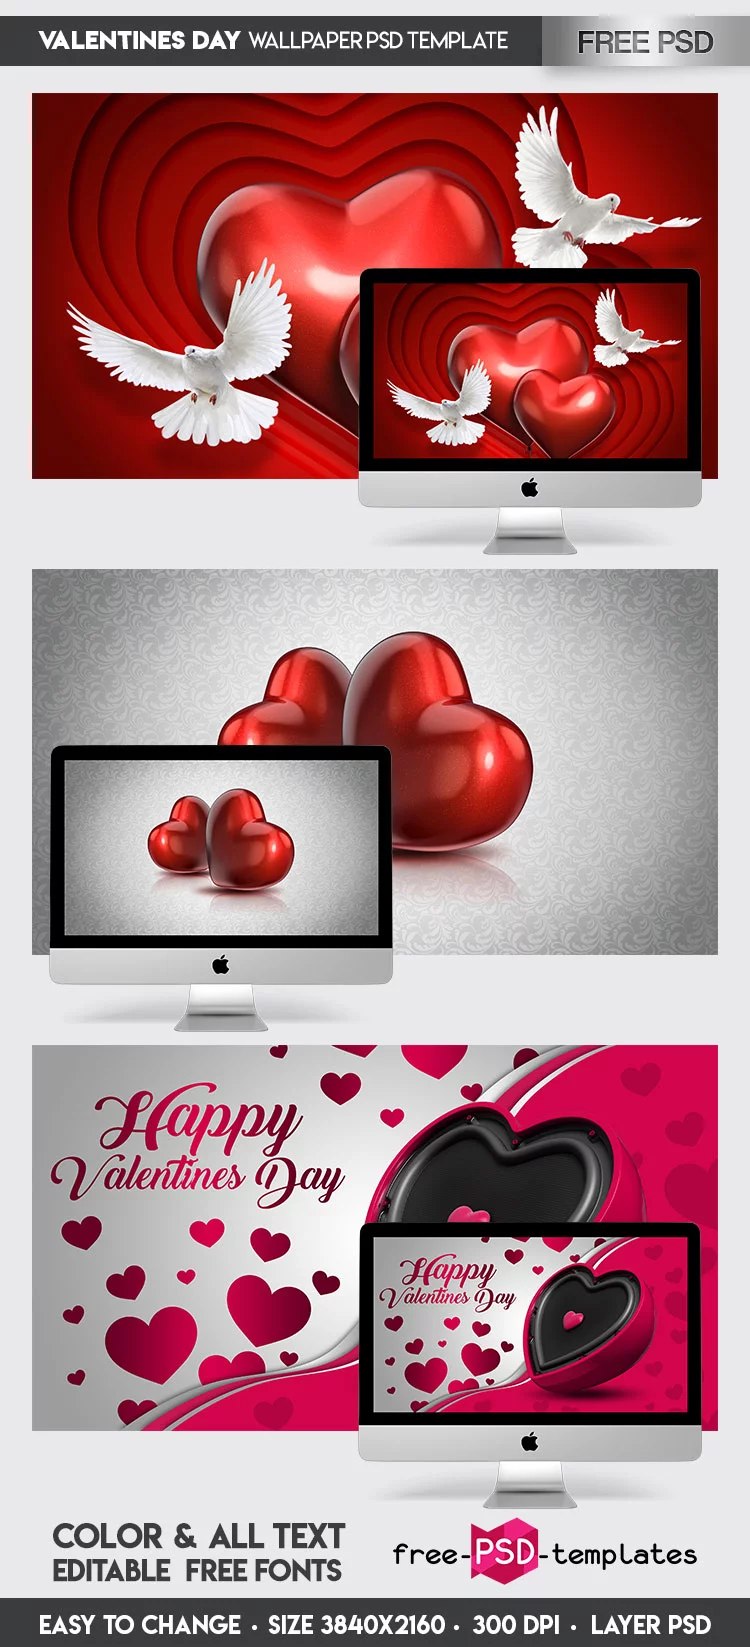 Free Valentine Day Wallpaper IN PSD